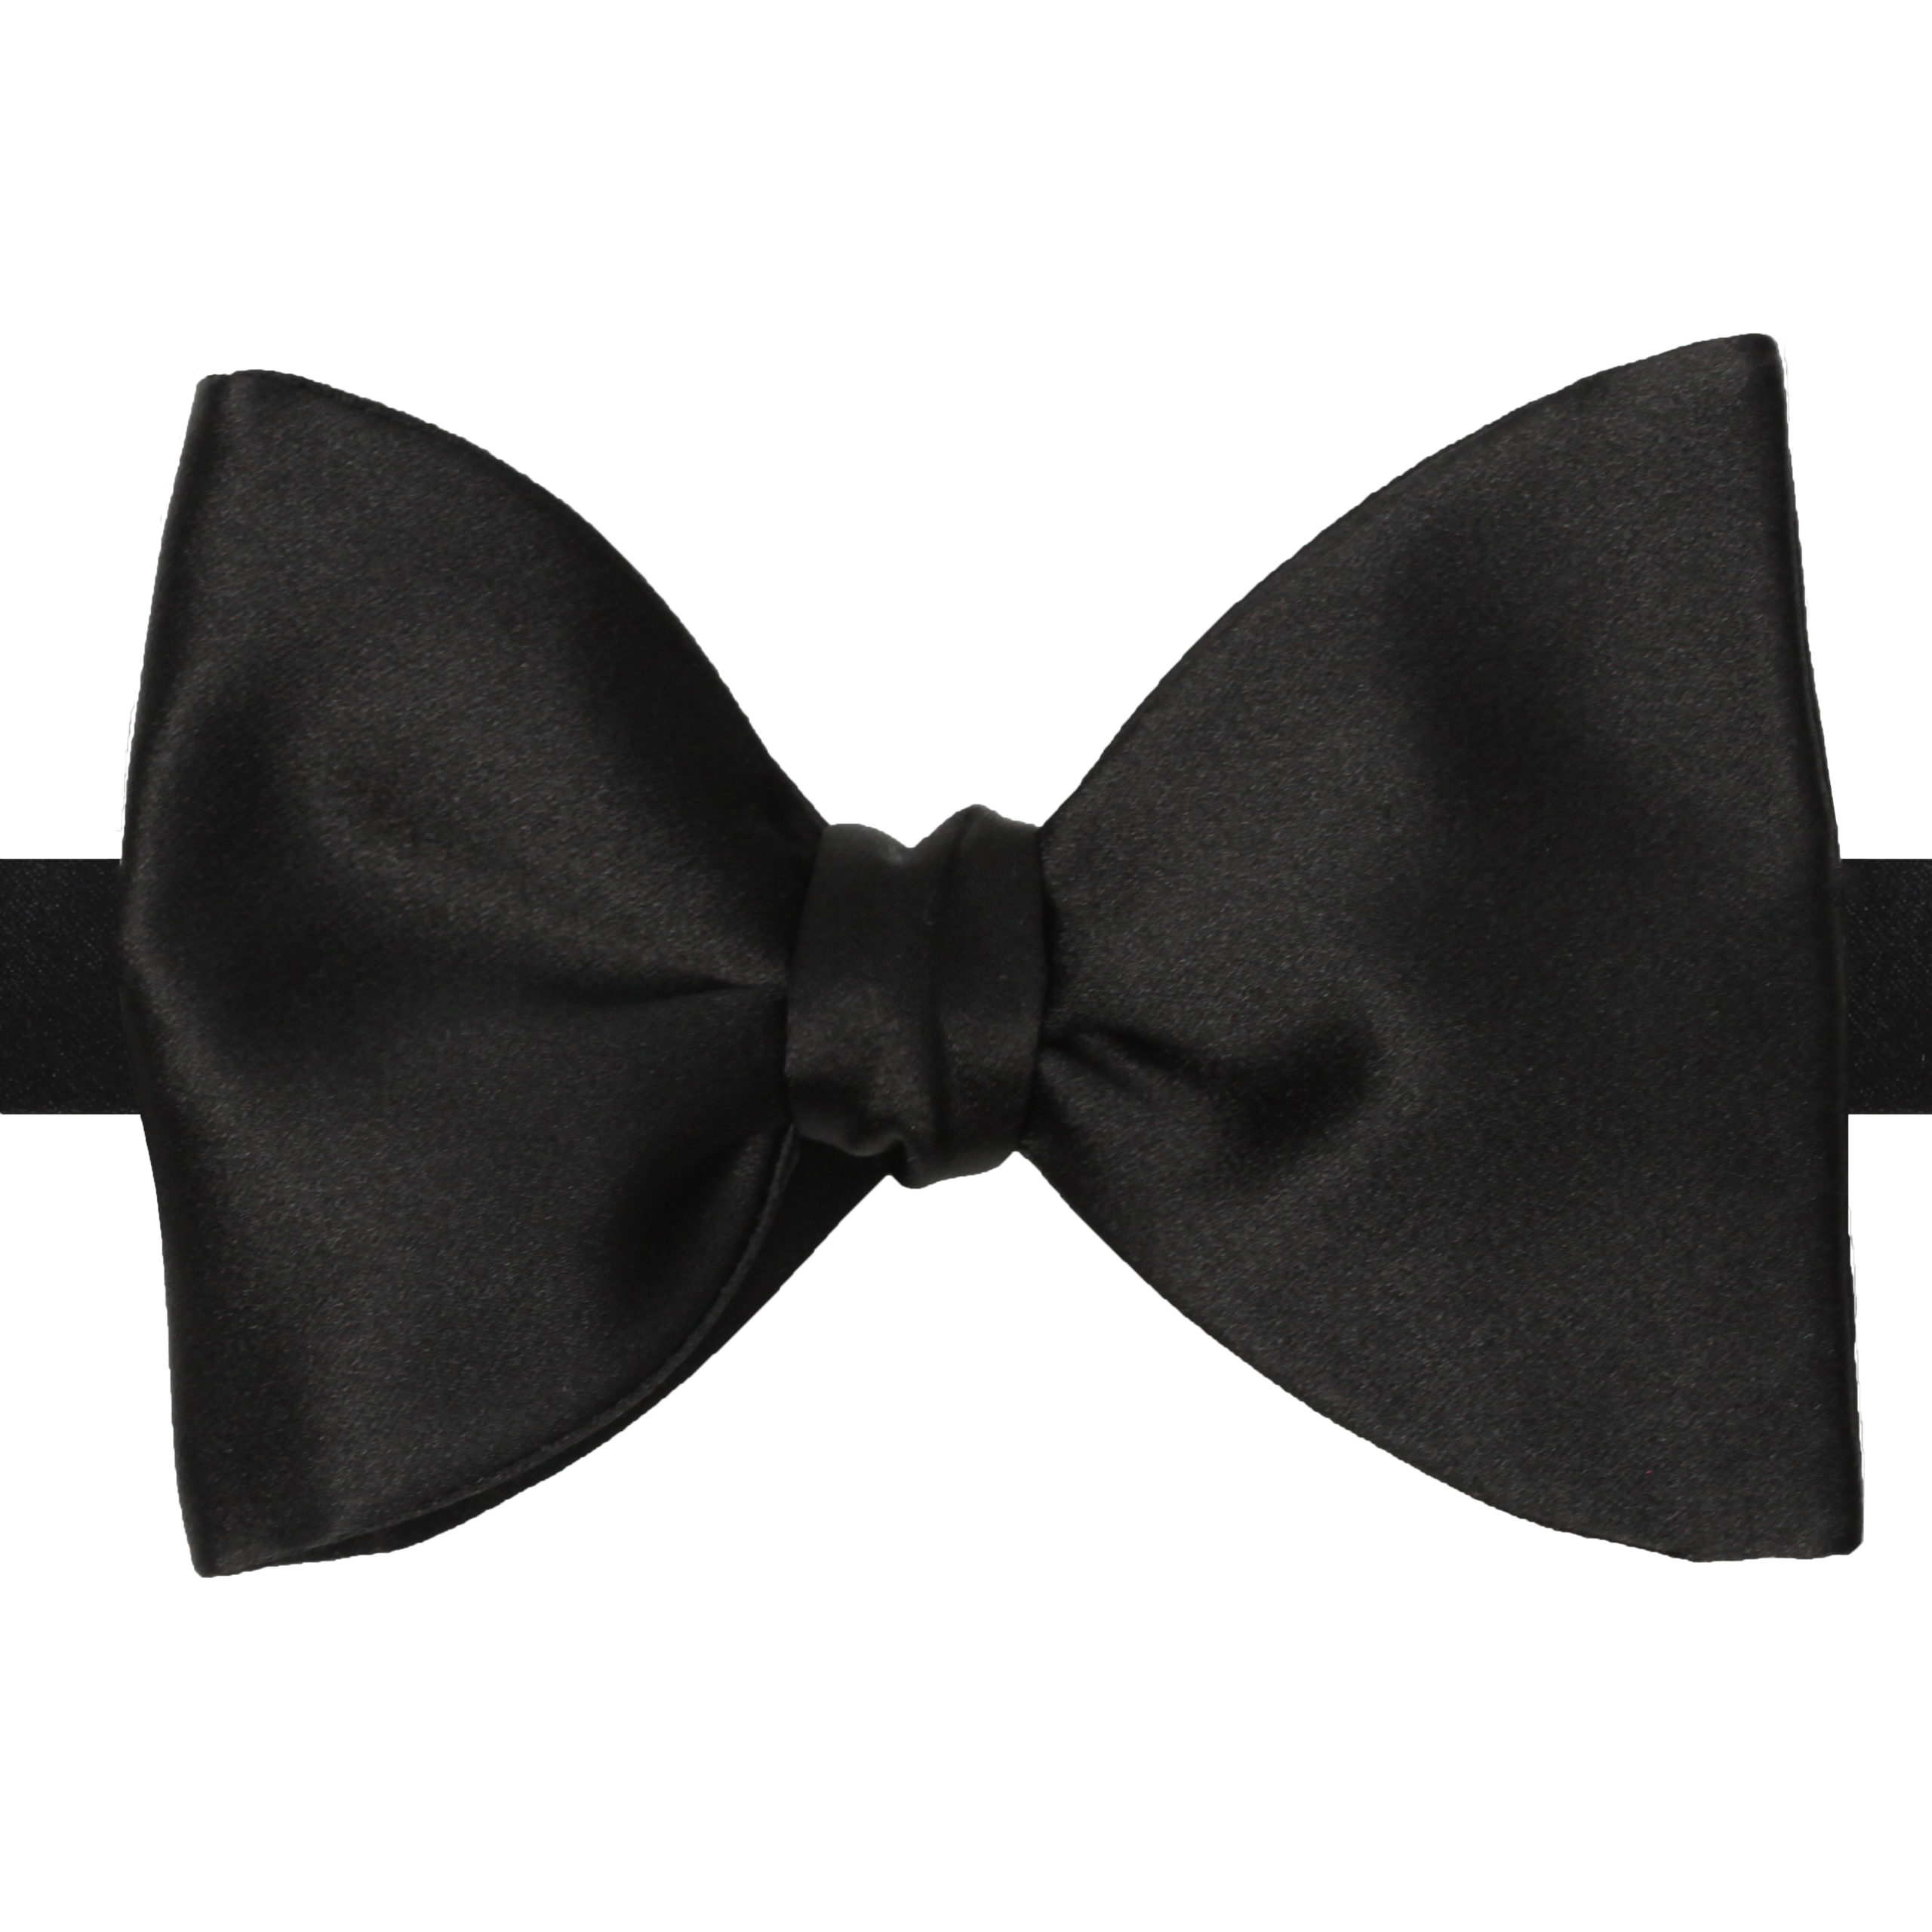 Oversized Hranek – Black Silk Satin Bow Tie - la Bowtique Bowties